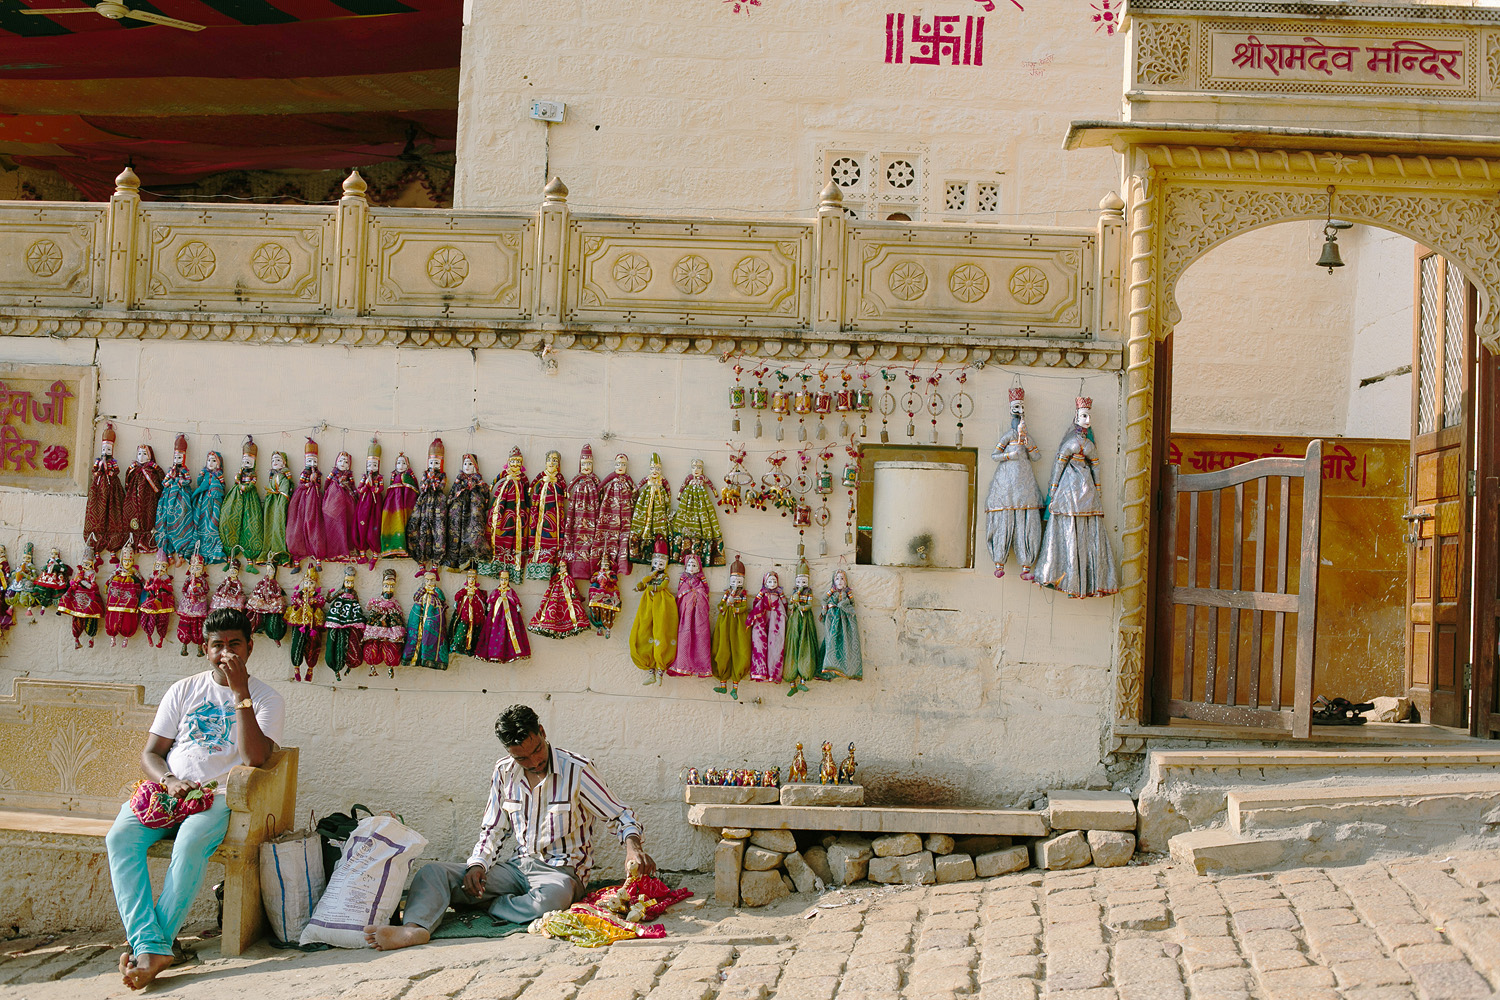 Vendors at Jaisalmer Fort in India